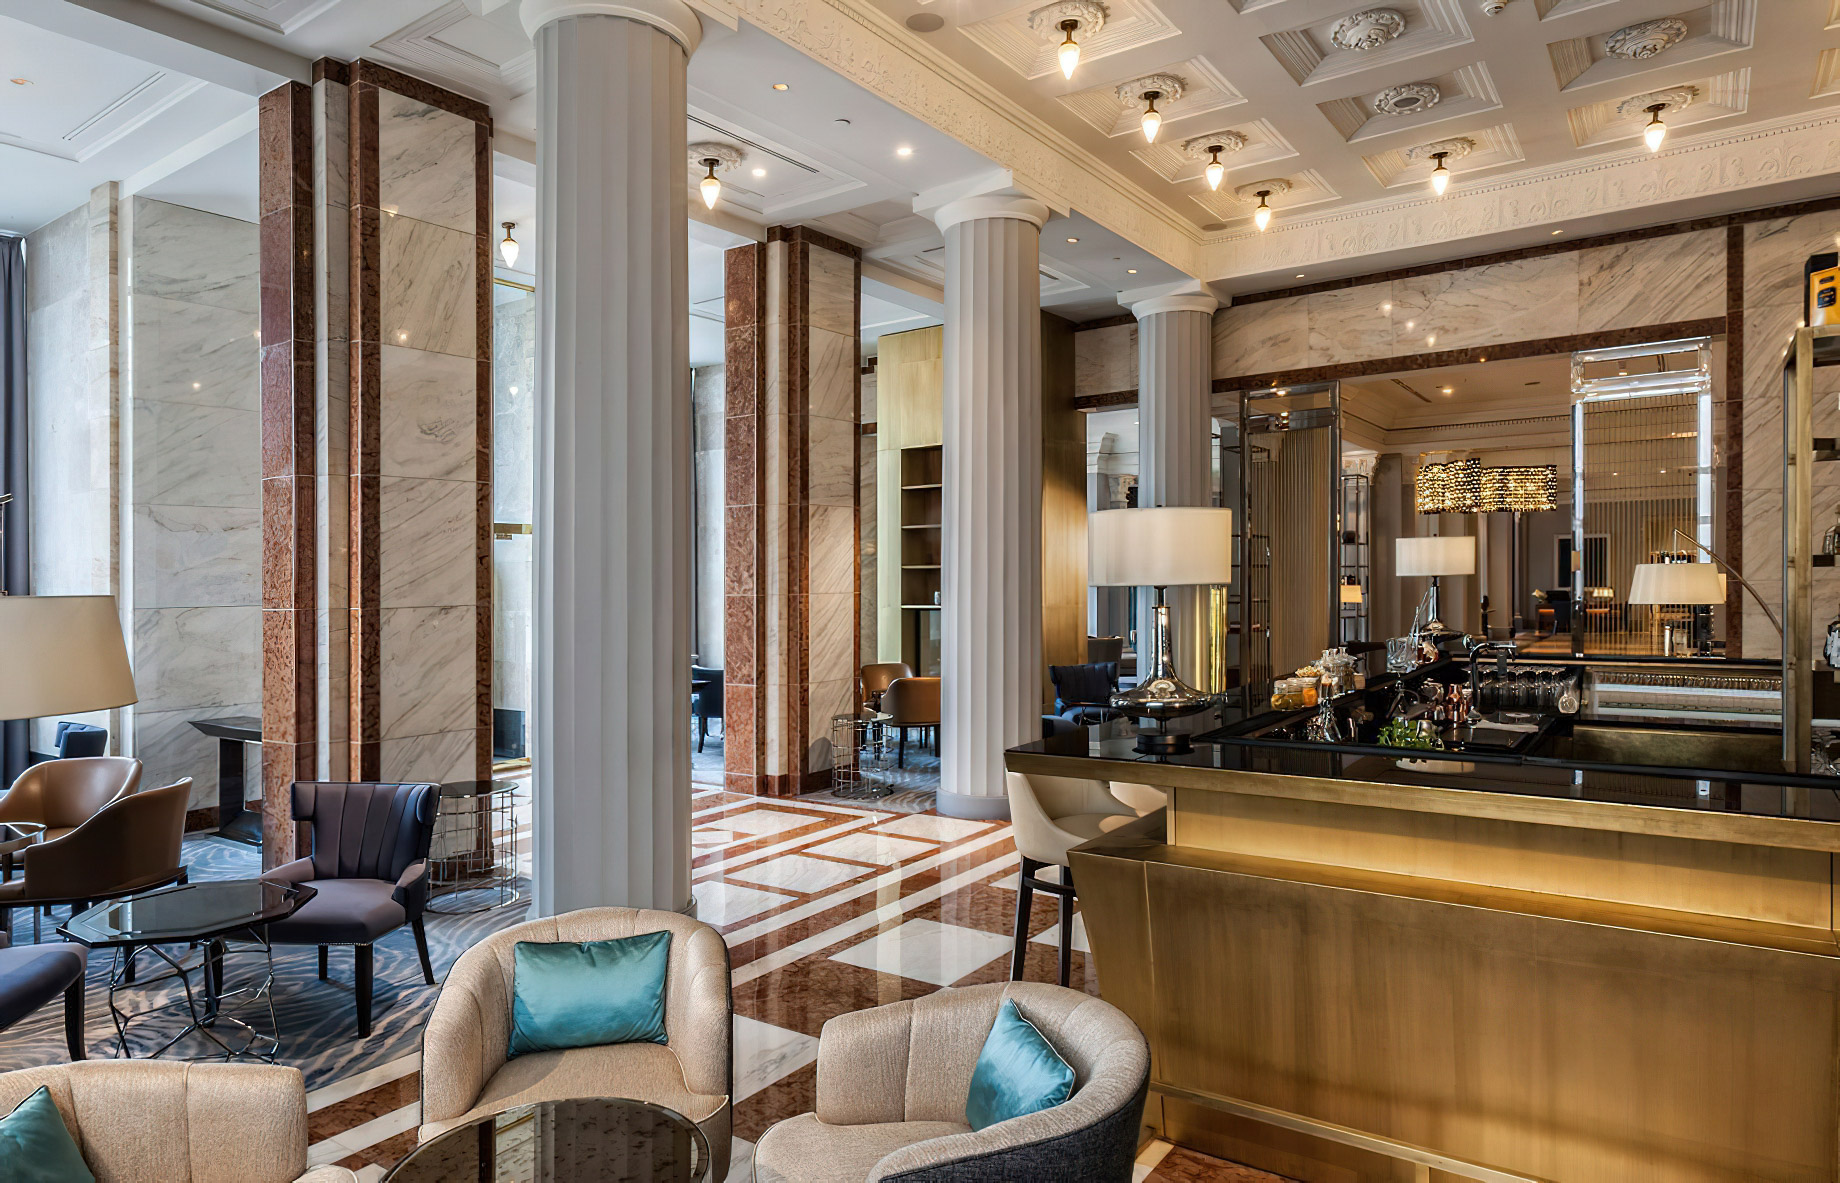 The Ritz-Carlton, Budapest Hotel - Budapest, Hungary - Kaffee Wein Interior